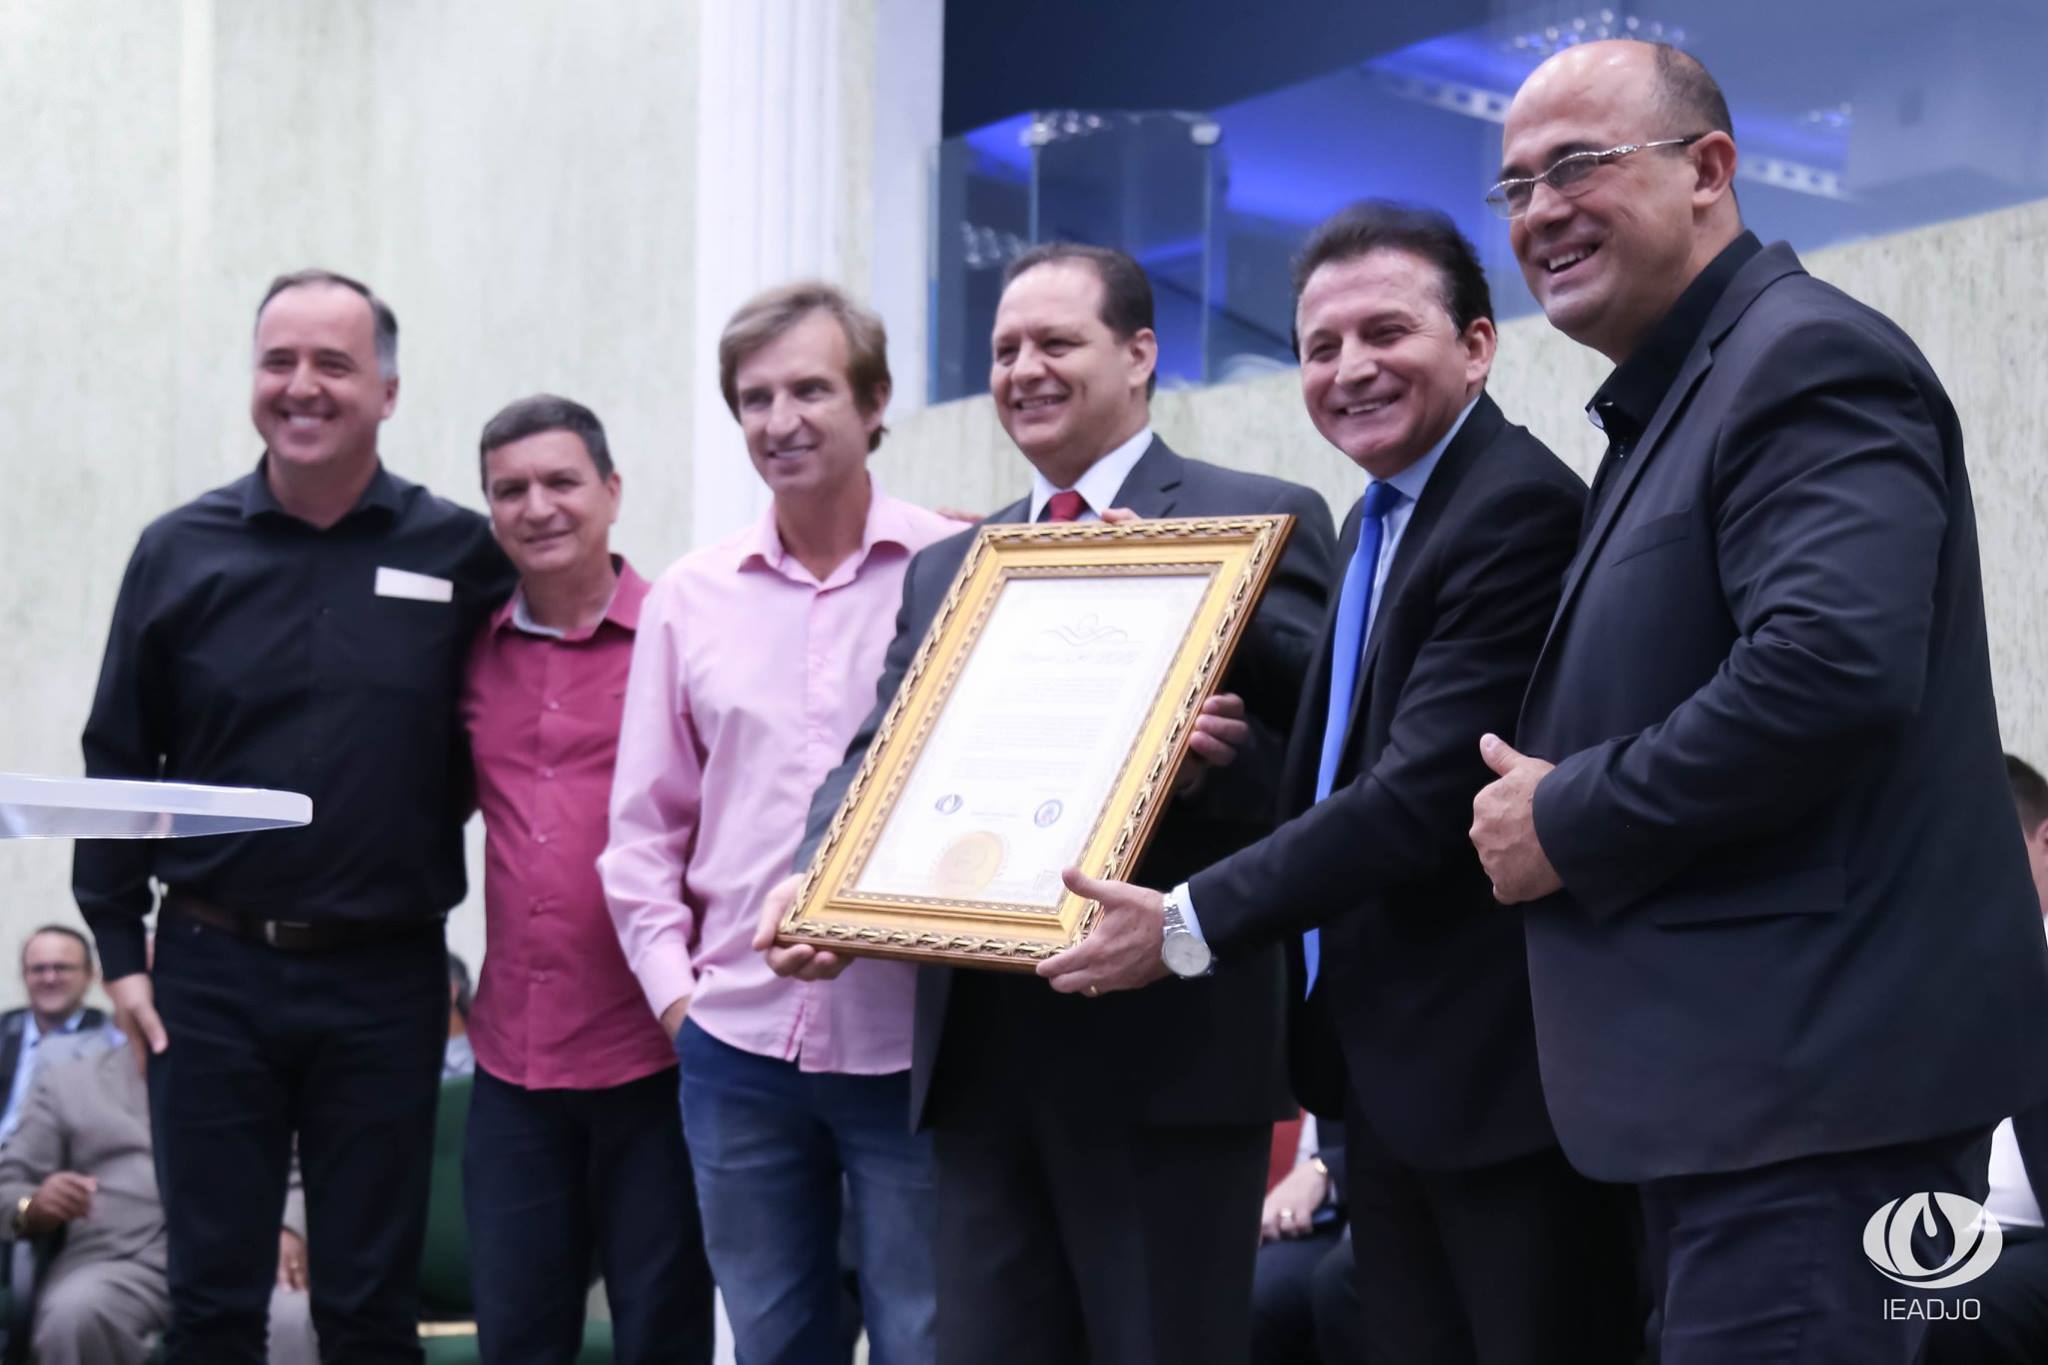 Presidente da IEADJO é homenageado pela Câmara de Vereadores de Joinville